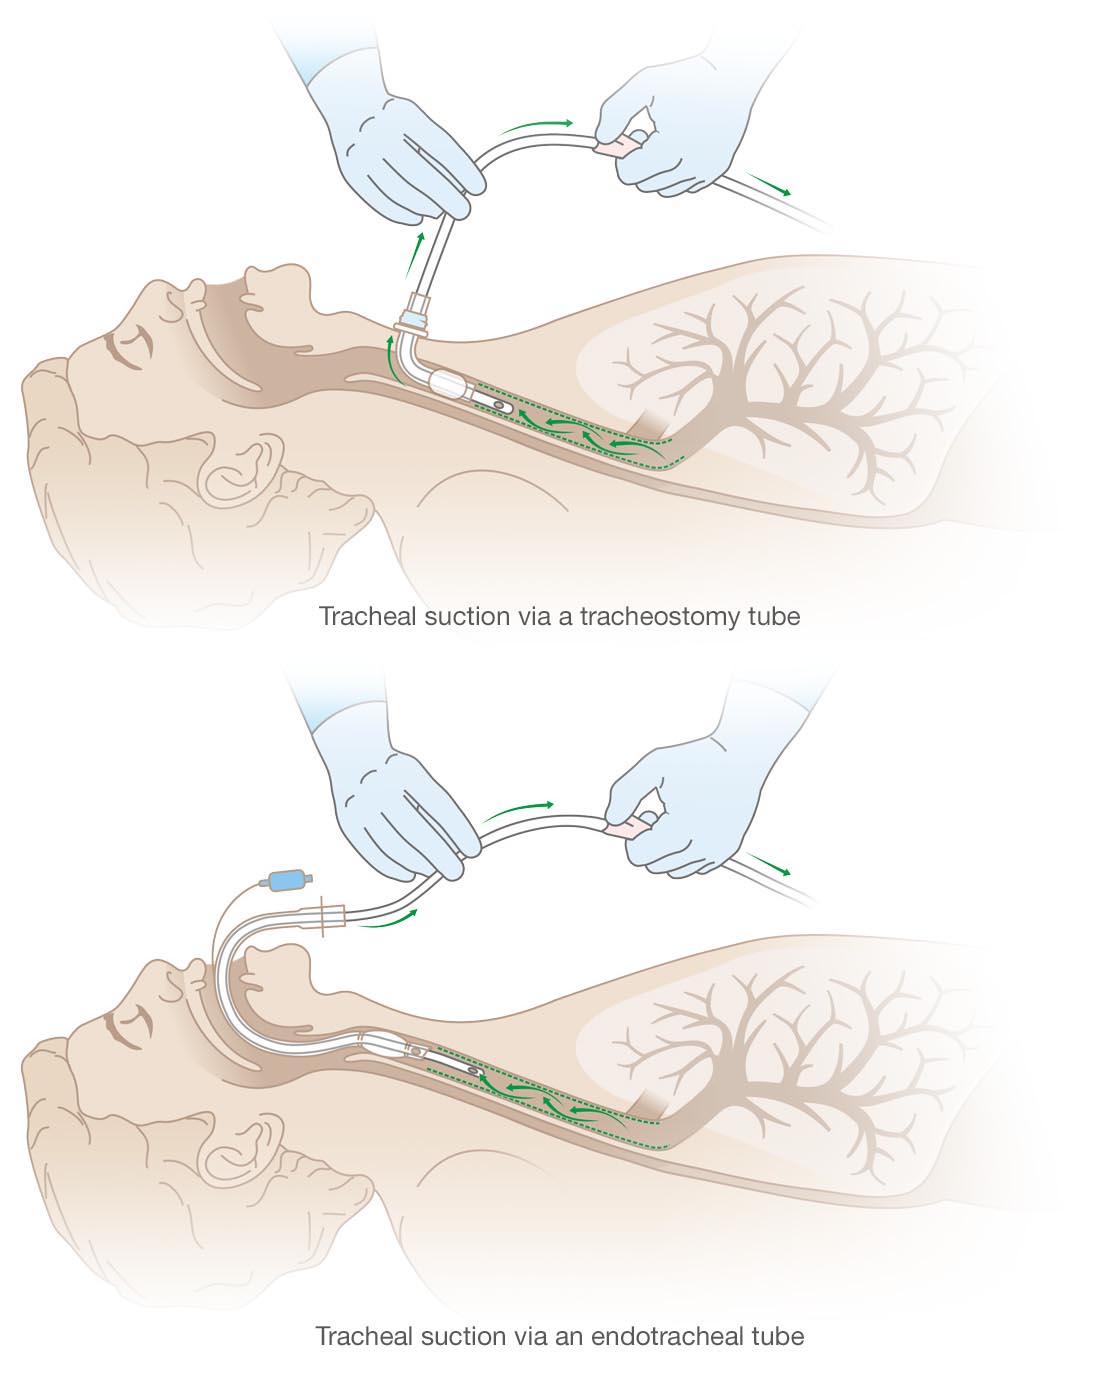 How to suction via a tracheostomy or endotracheal tube